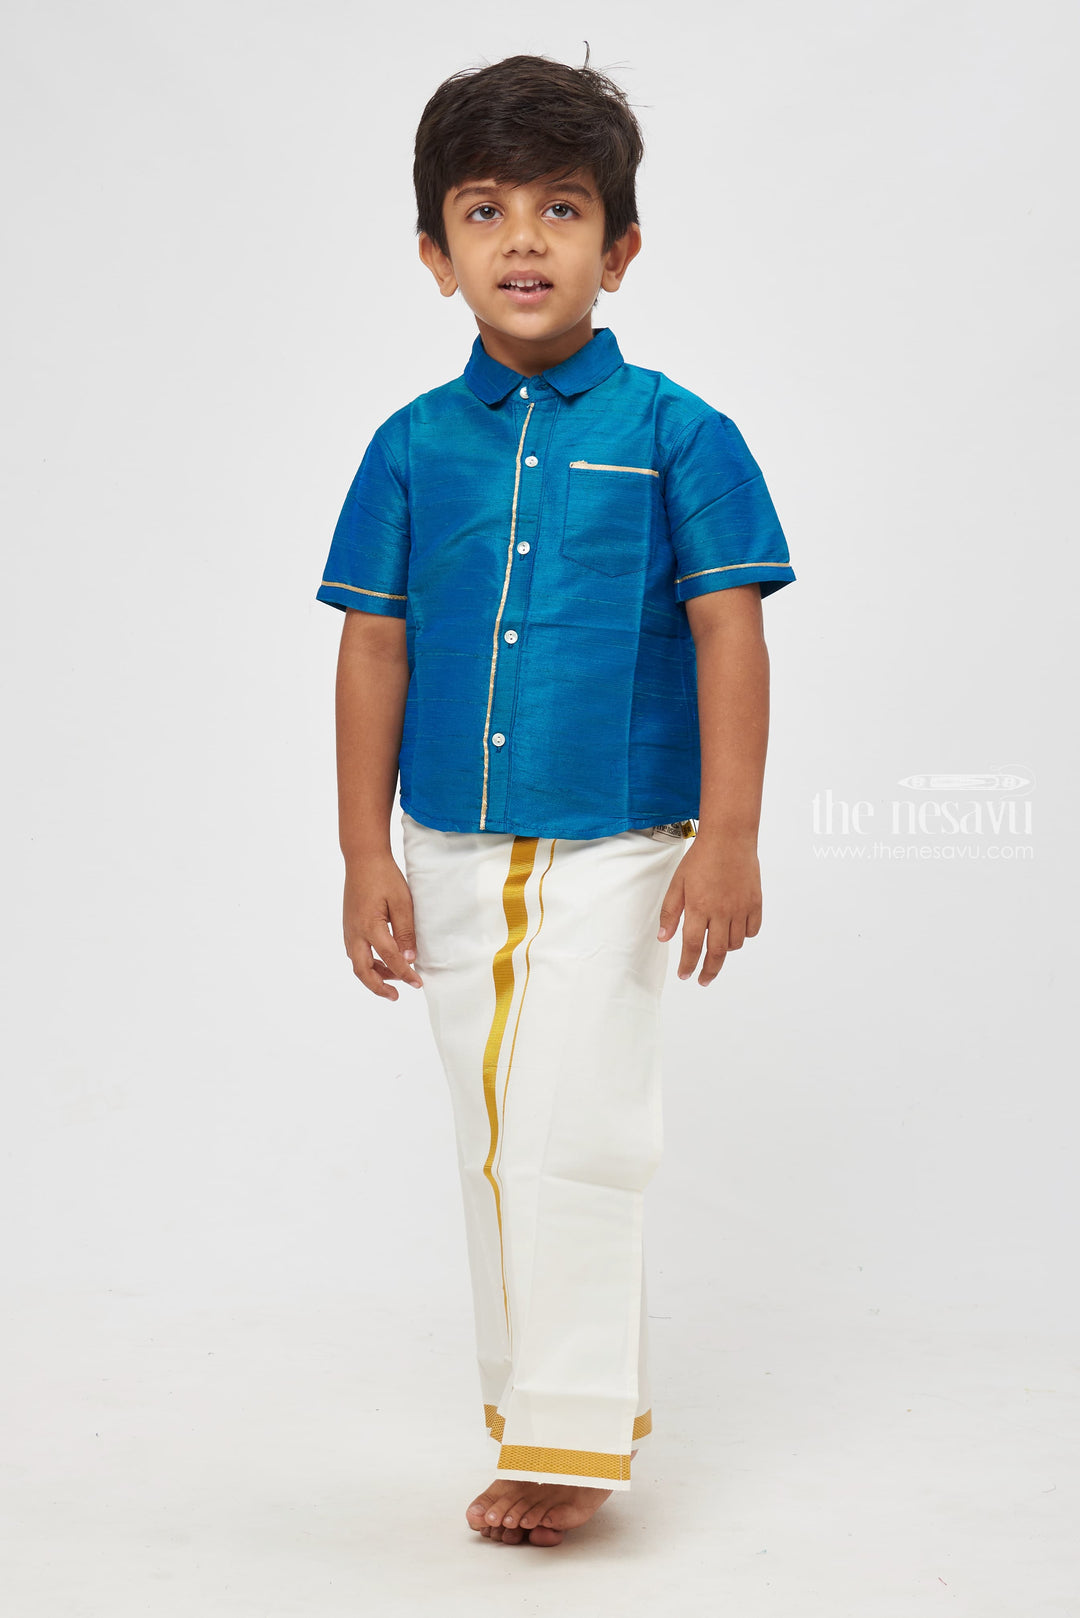 The Nesavu Boys Silk Shirt Vibrant Teal Blue Silk Shirt for Boys: A Modern Twist to Traditional Elegance Nesavu 16 (1Y) / Blue / Blend Silk BS101A-16 Boys Radiant Teal Blue Silk Shirt: Oceanic Hues Meet Urbane Sophistication | The Nesavu